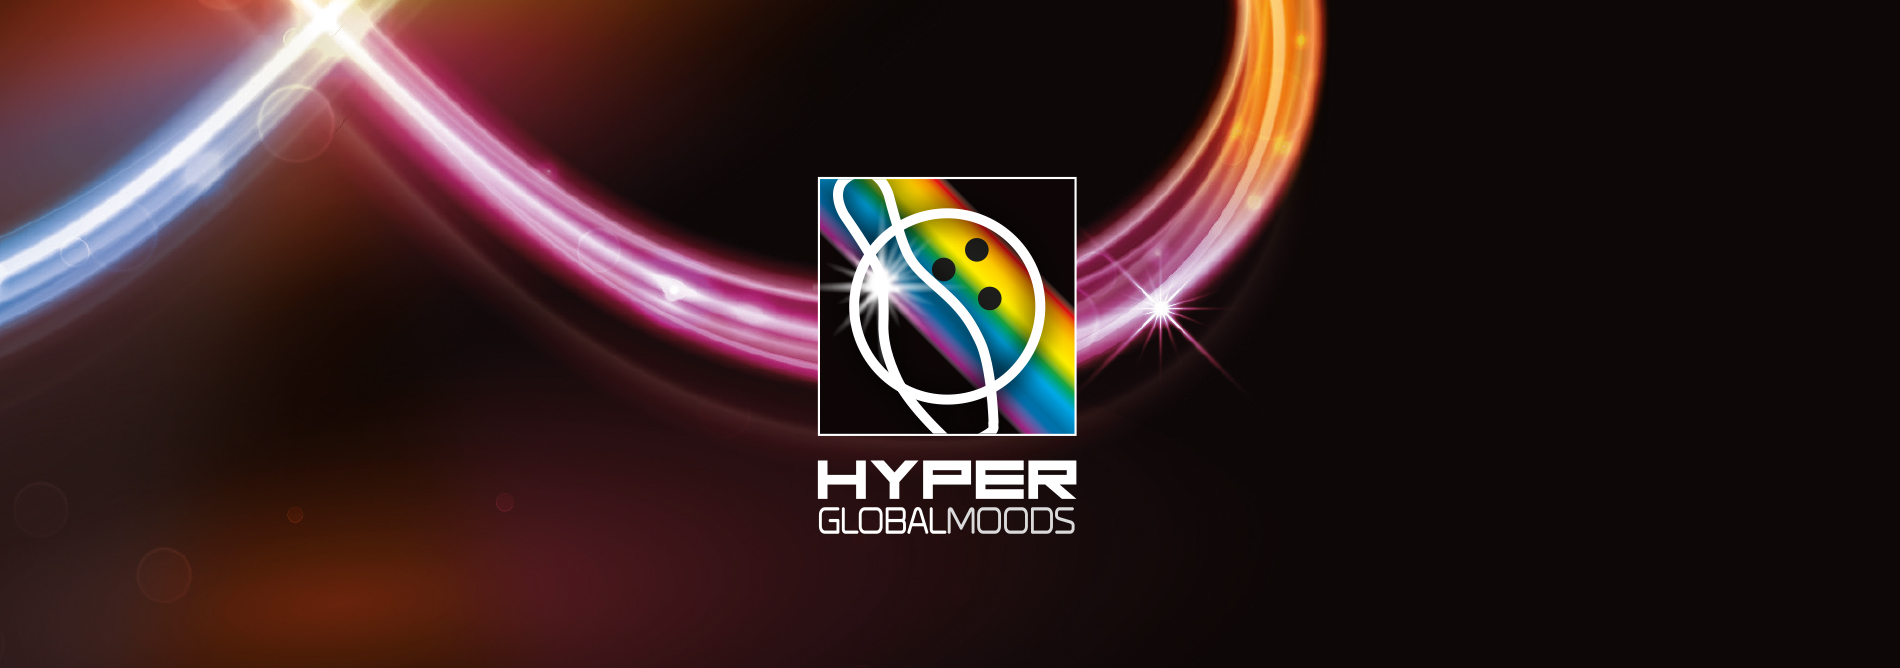 Bowling-QubicaAMF-hyper-bowling-hyper-global-moods-banner.jpg